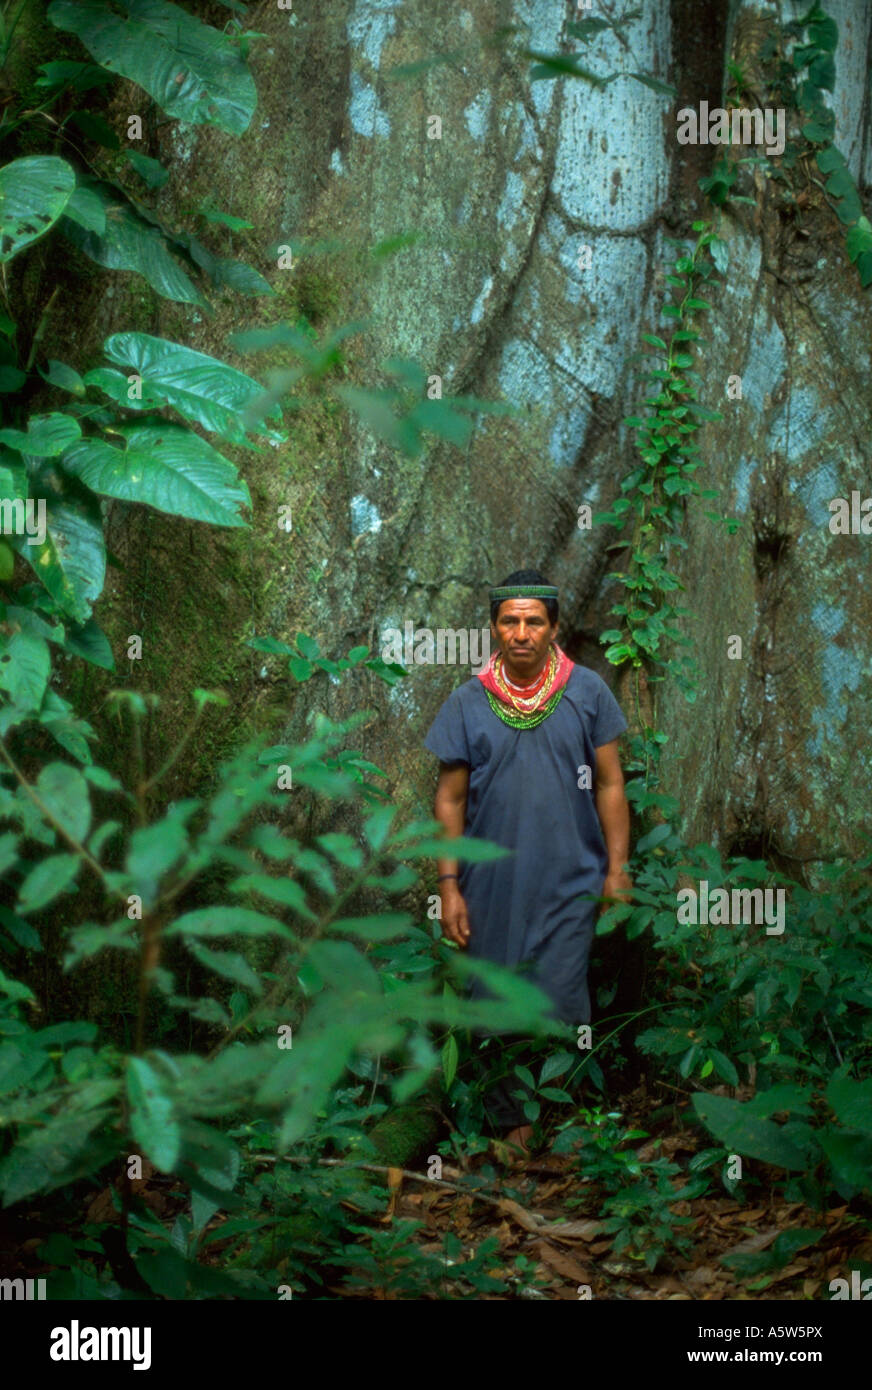 Painet hl0613 amazon rain forest ecuador árboles jungle bush hombre  masculino del tronco de un árbol nativo exuberante exóticos indómitas  primordial Fotografía de stock - Alamy